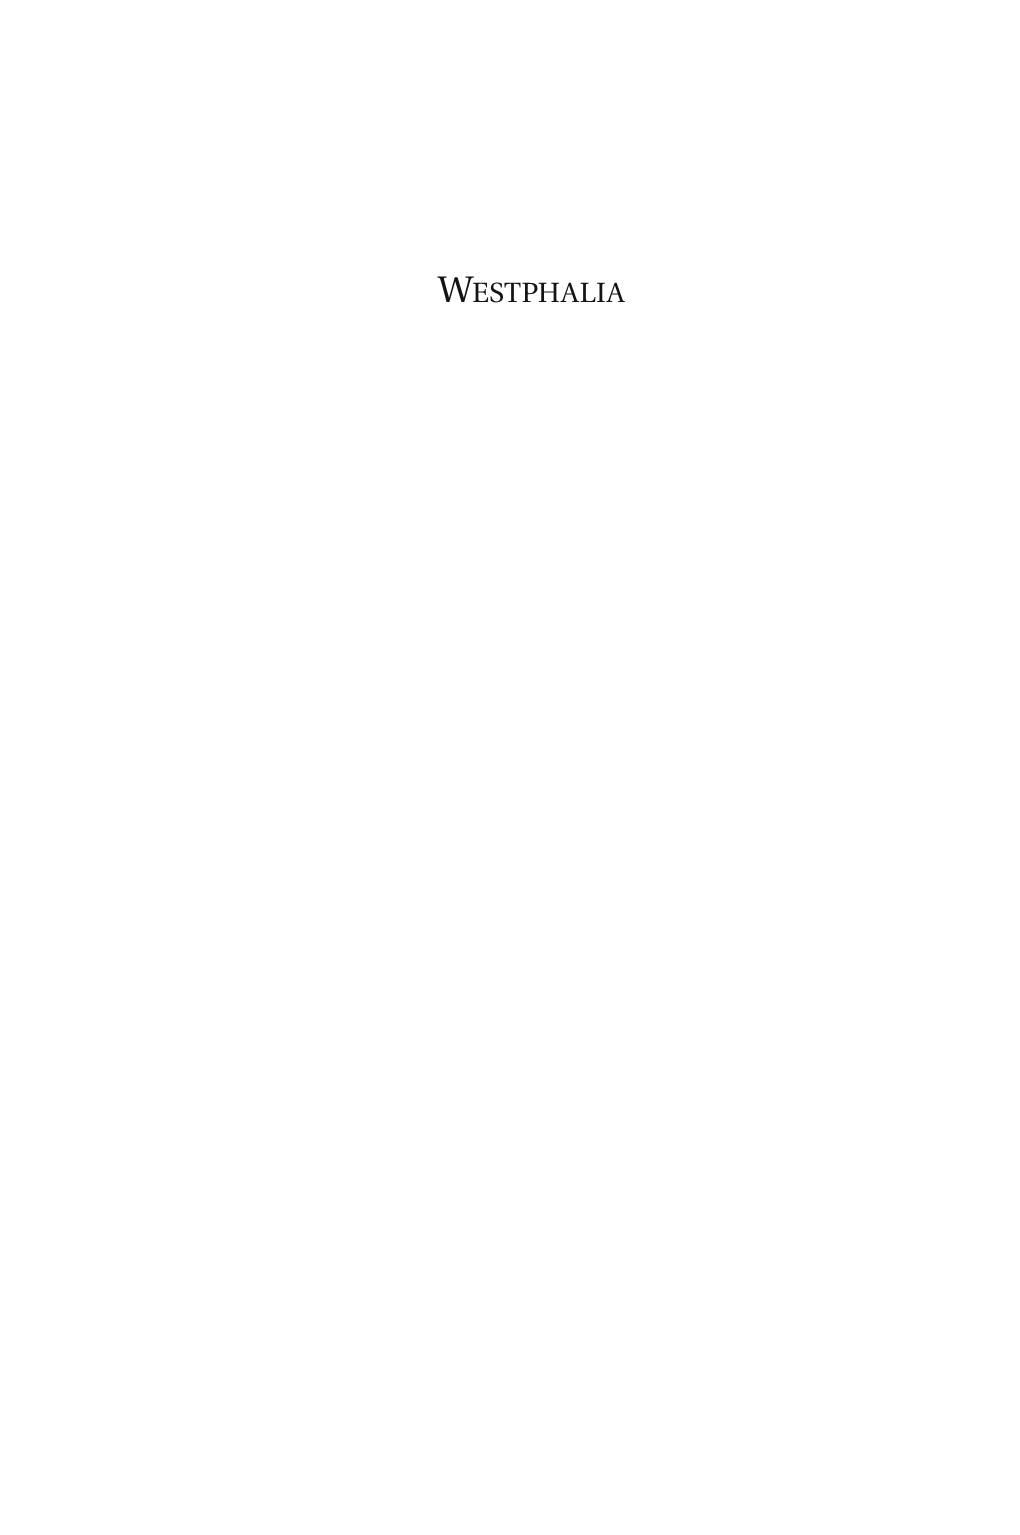 Westphalia, 1643–1648 (1999) a Historical Dictionary of the 1648 Peace of Westphalia , with Anuschka Tischer (2001) W ESTPHALIA